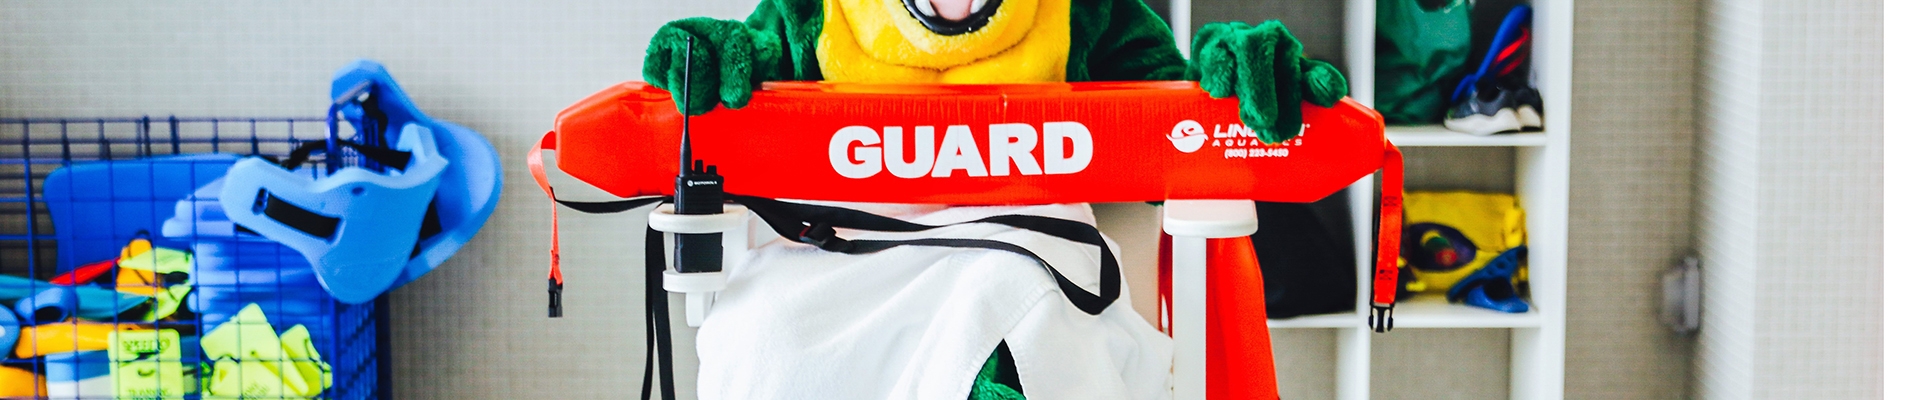 Lifeguard Mascot